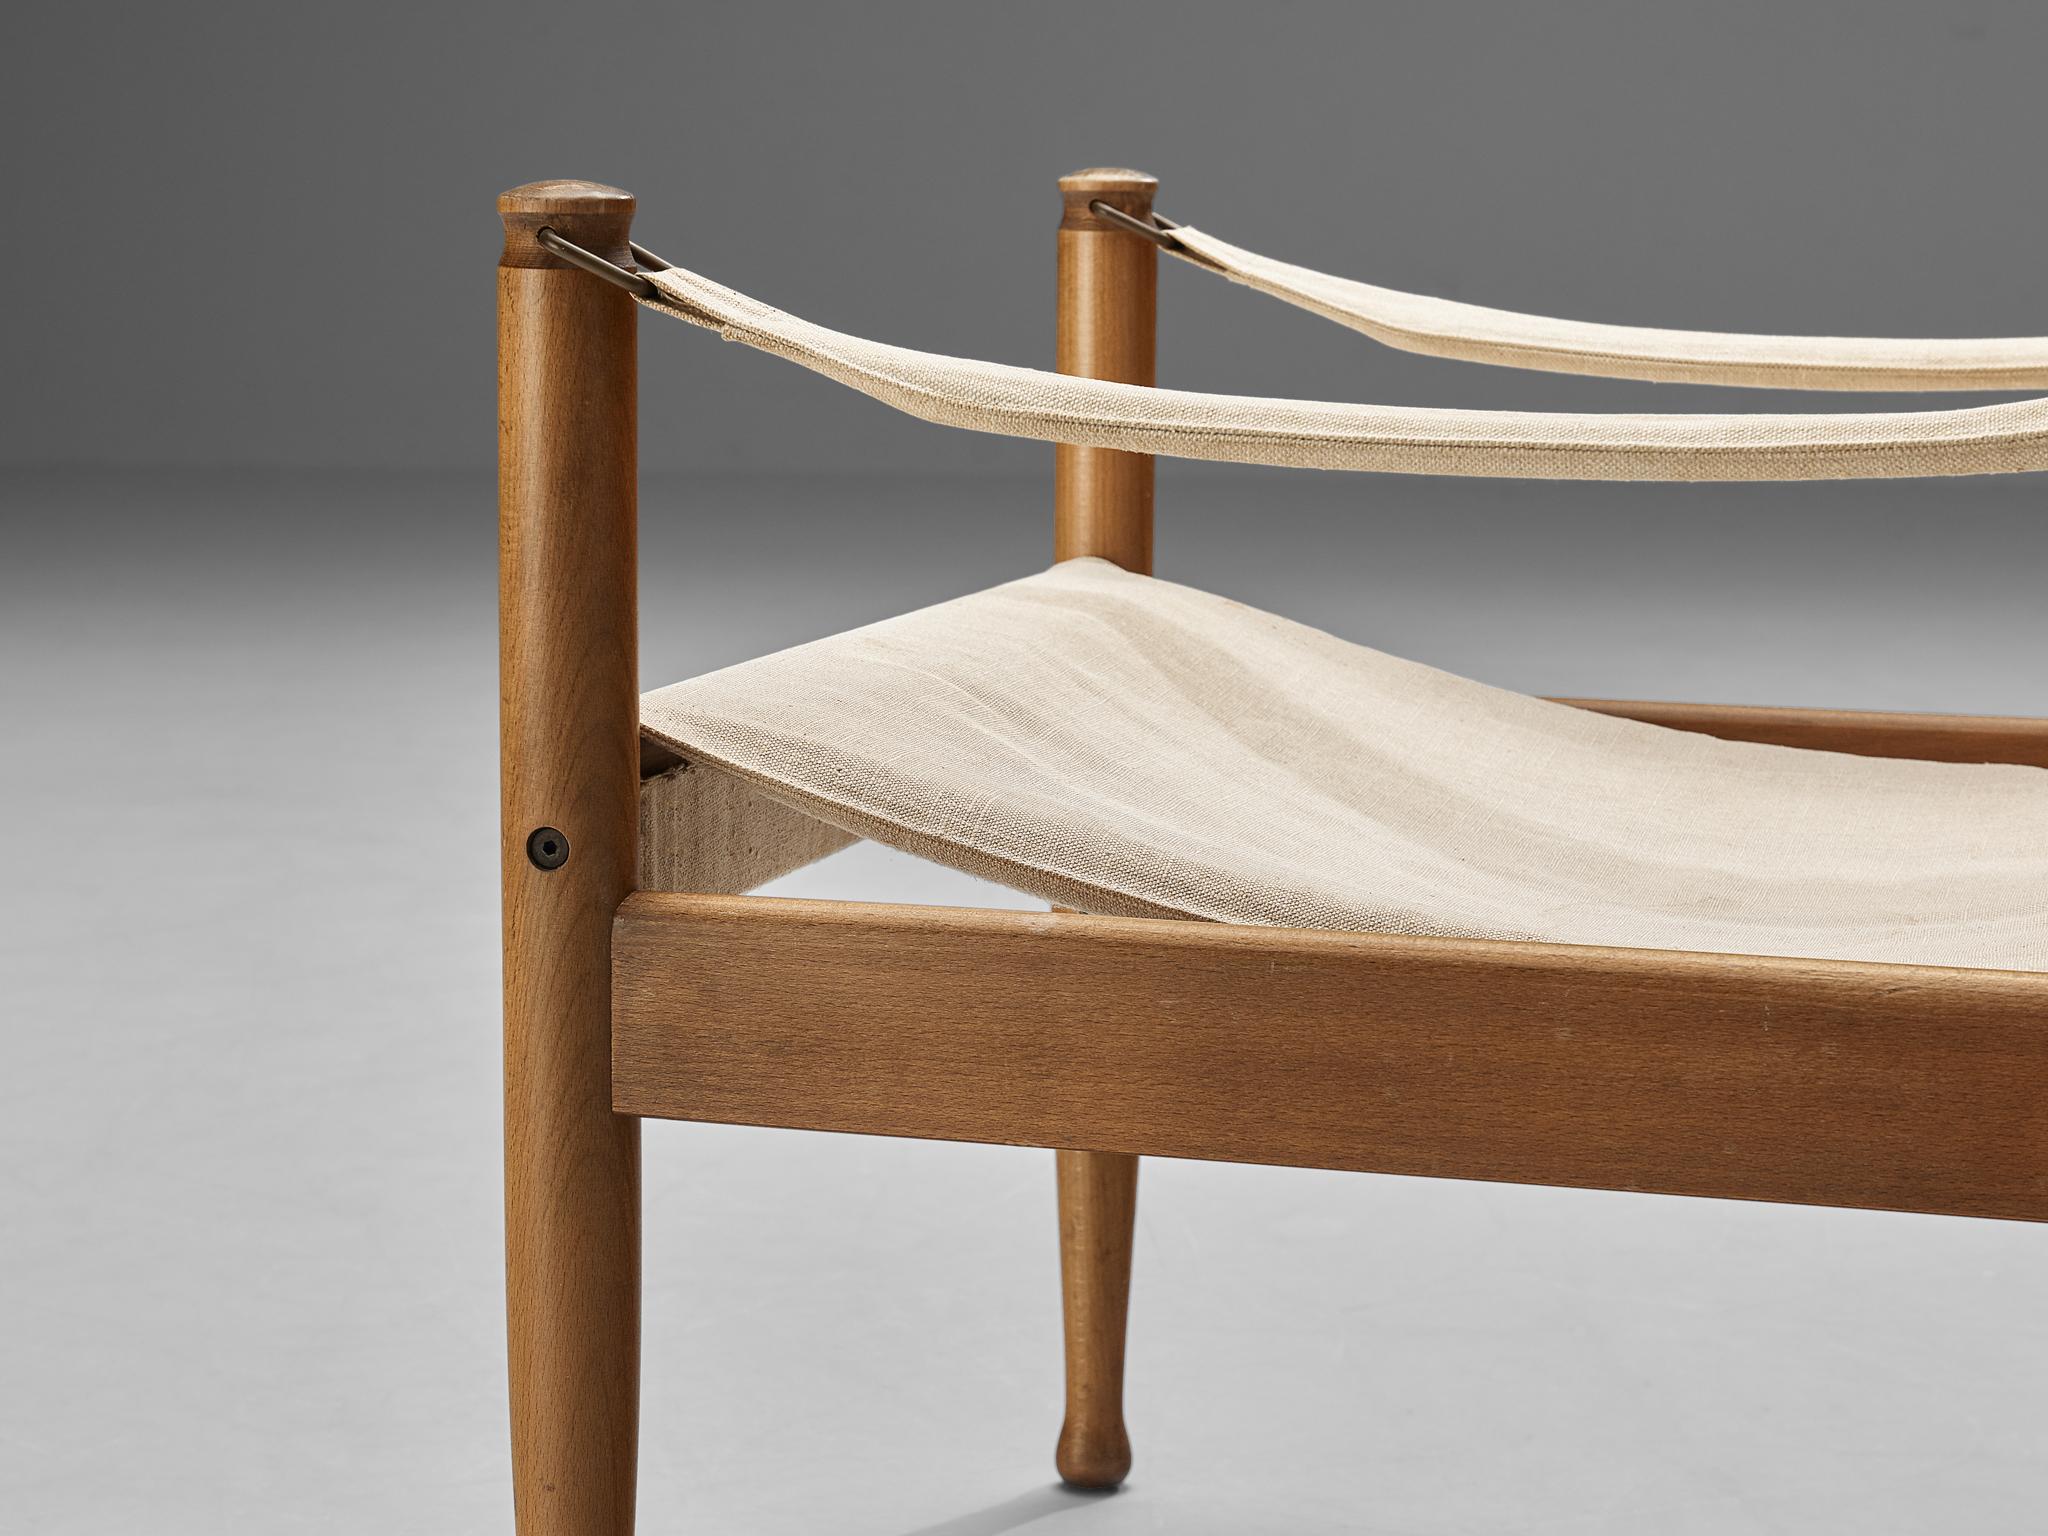 Erik Wørts Safari Lounge Chair in Off-White Canvas and Wood